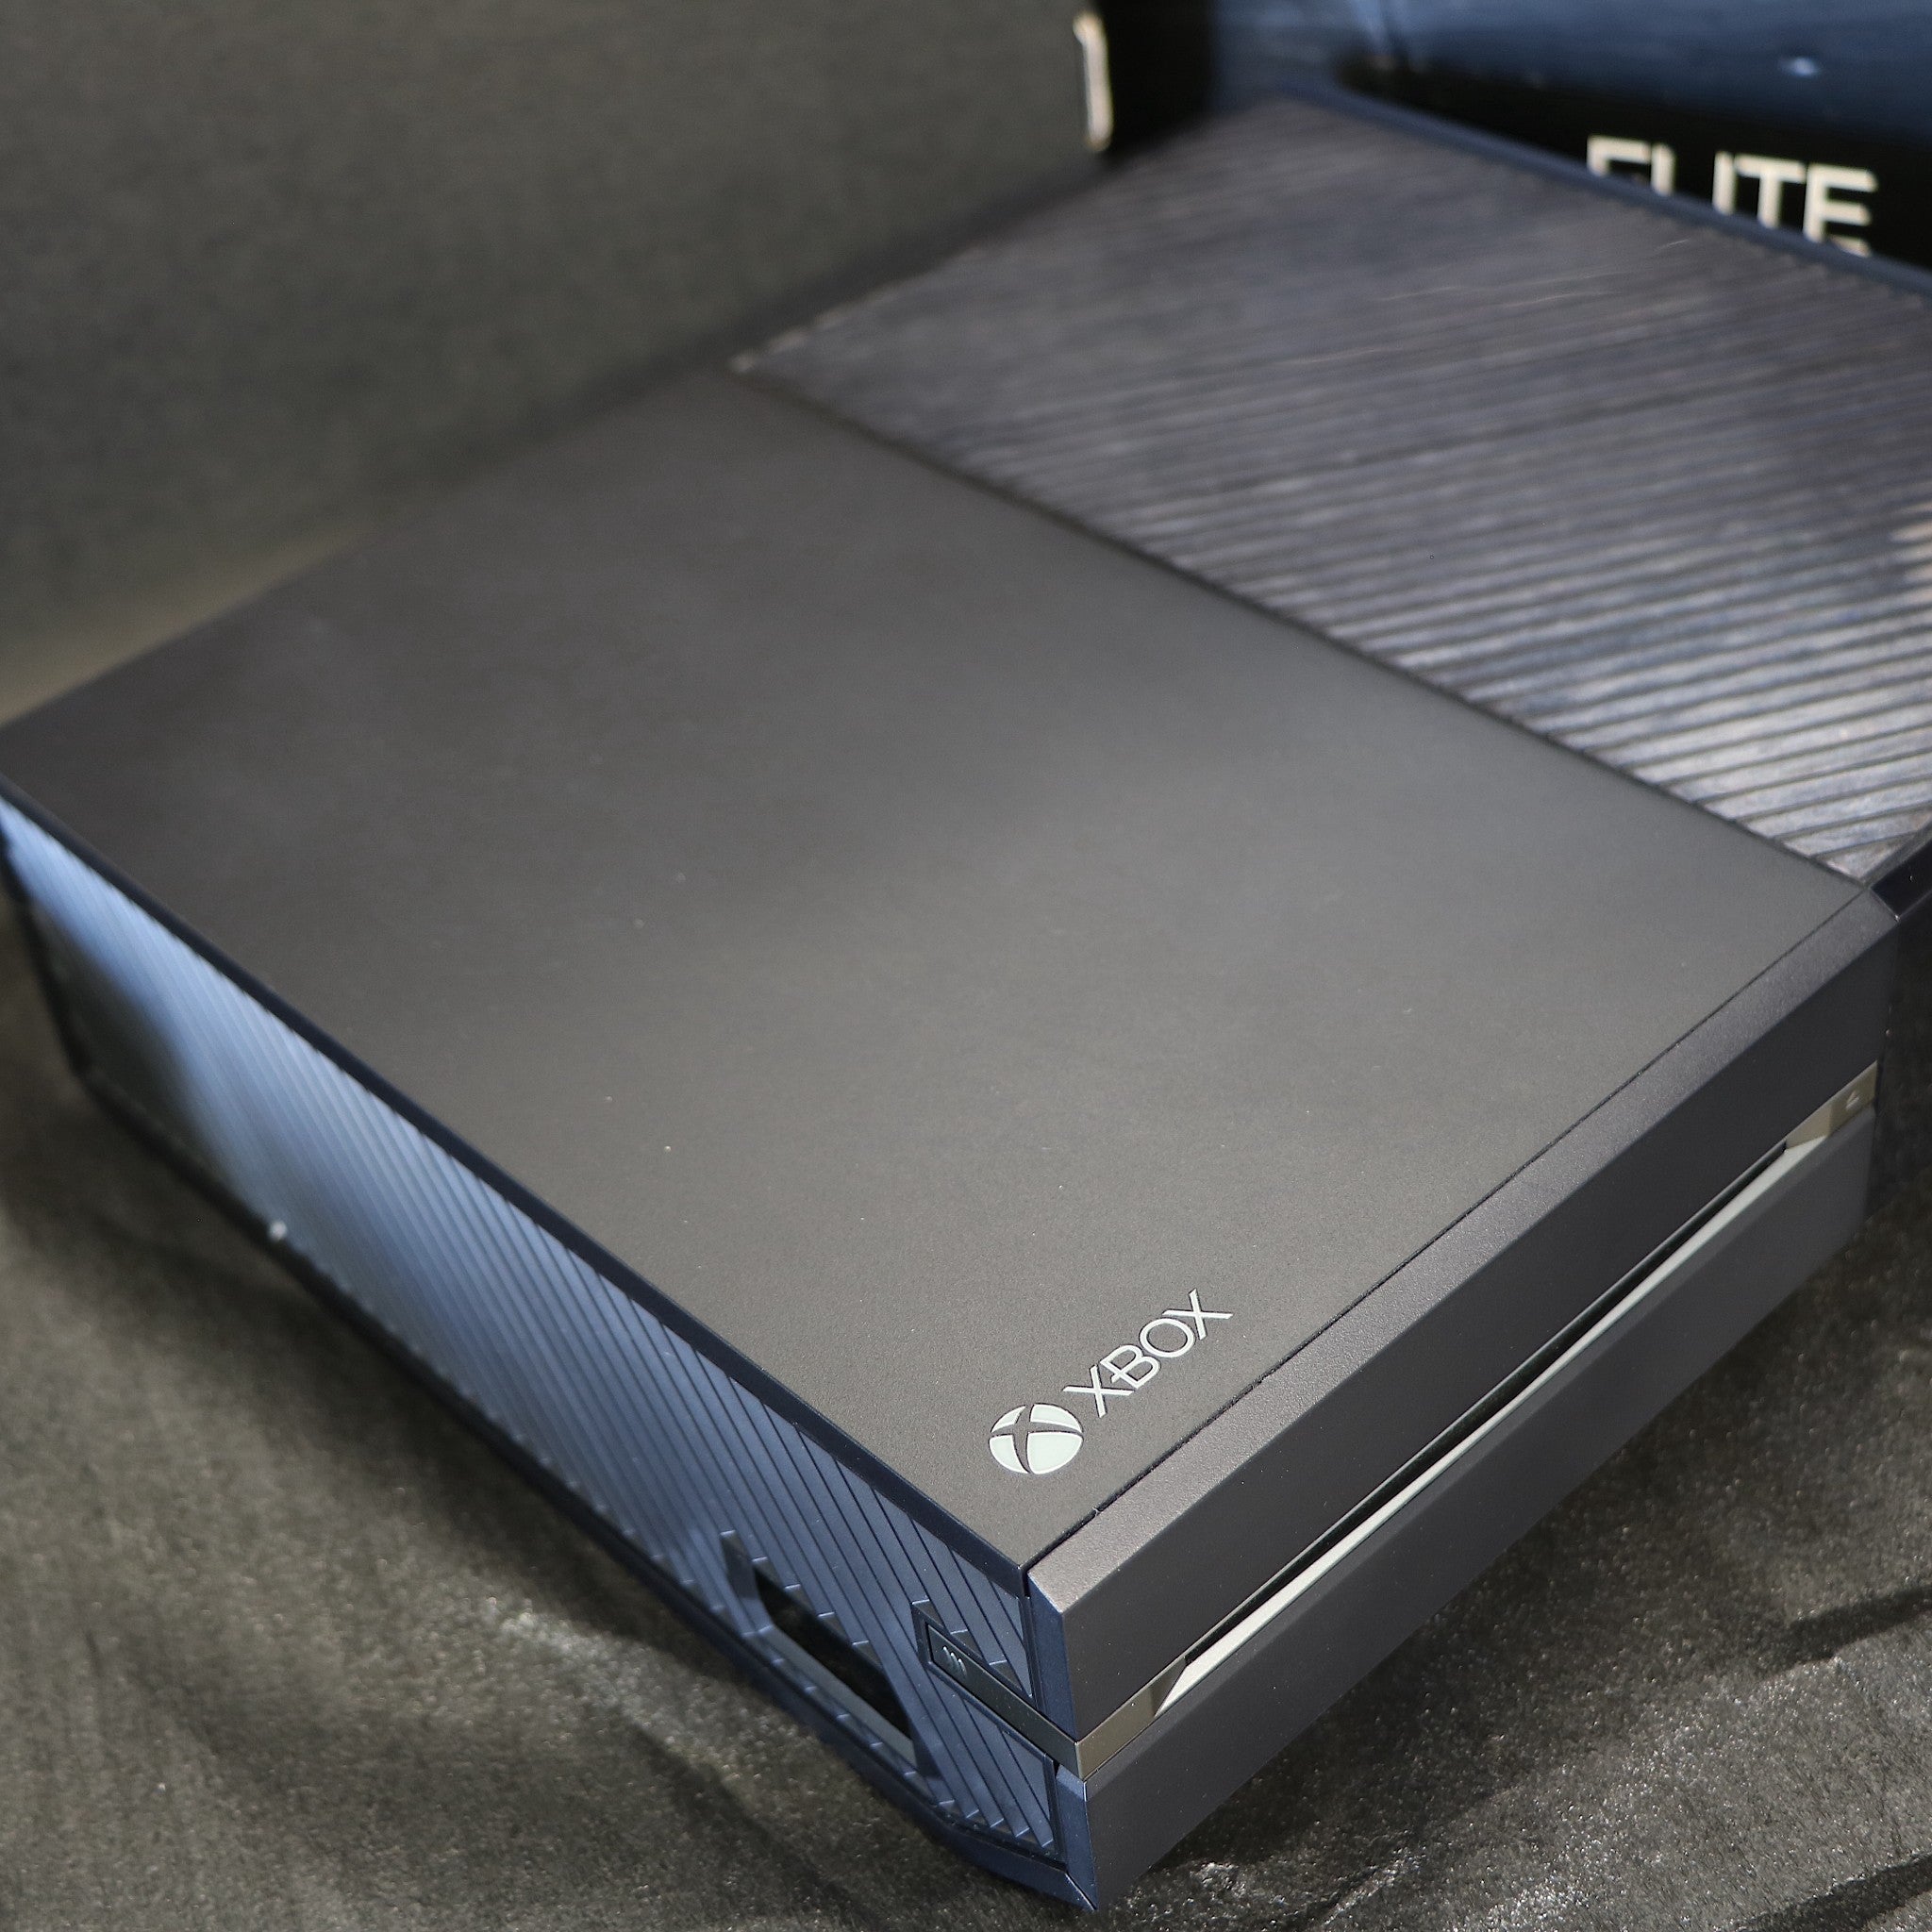 Microsoft Xbox One Elite Console 1TB Hybrid Drive 1540 | Boxed | Mint Condition